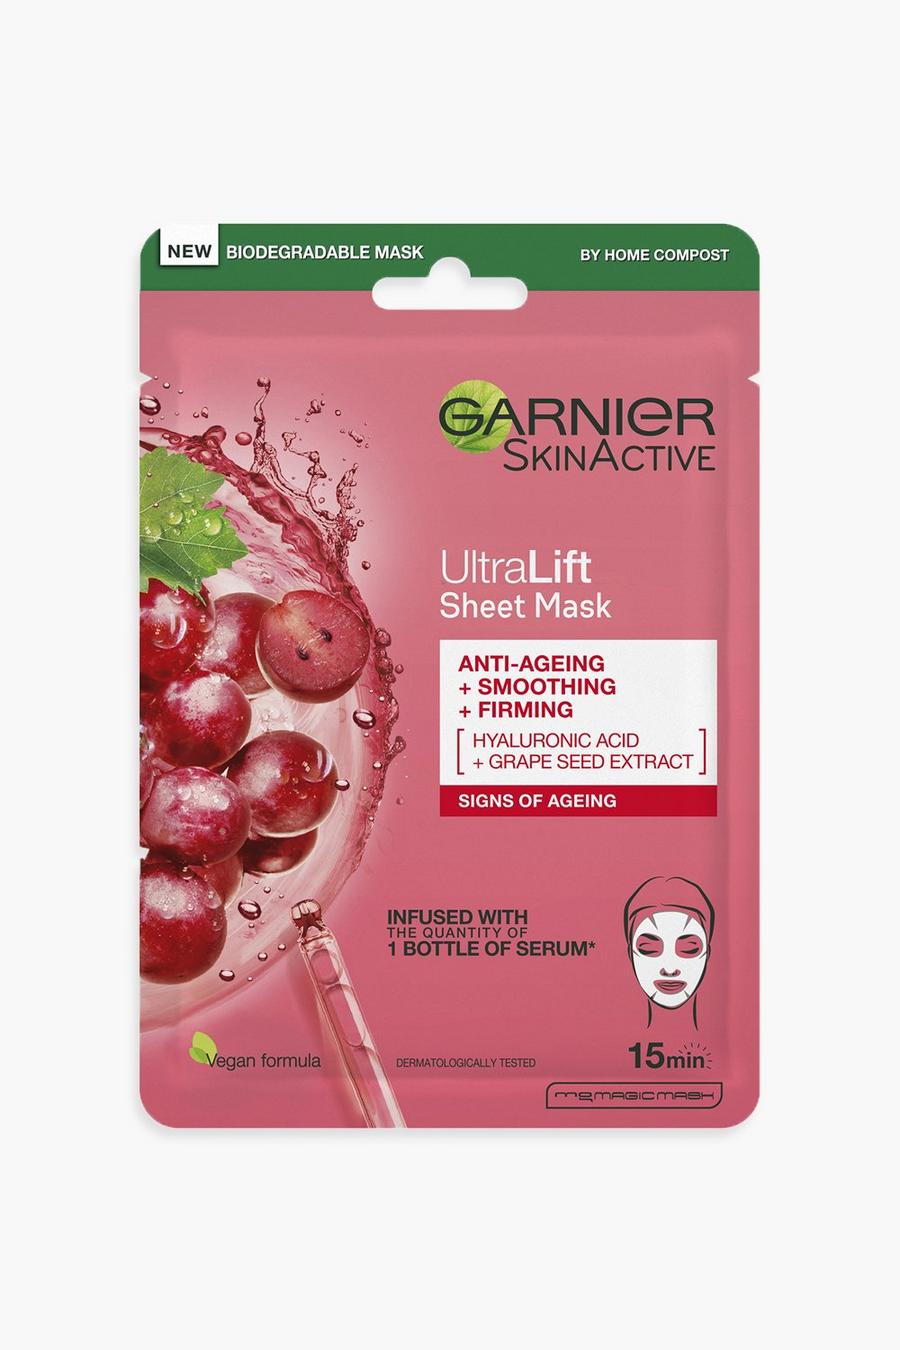 Garnier - Masque anti-âge - Skin Active, Dusky pink rose